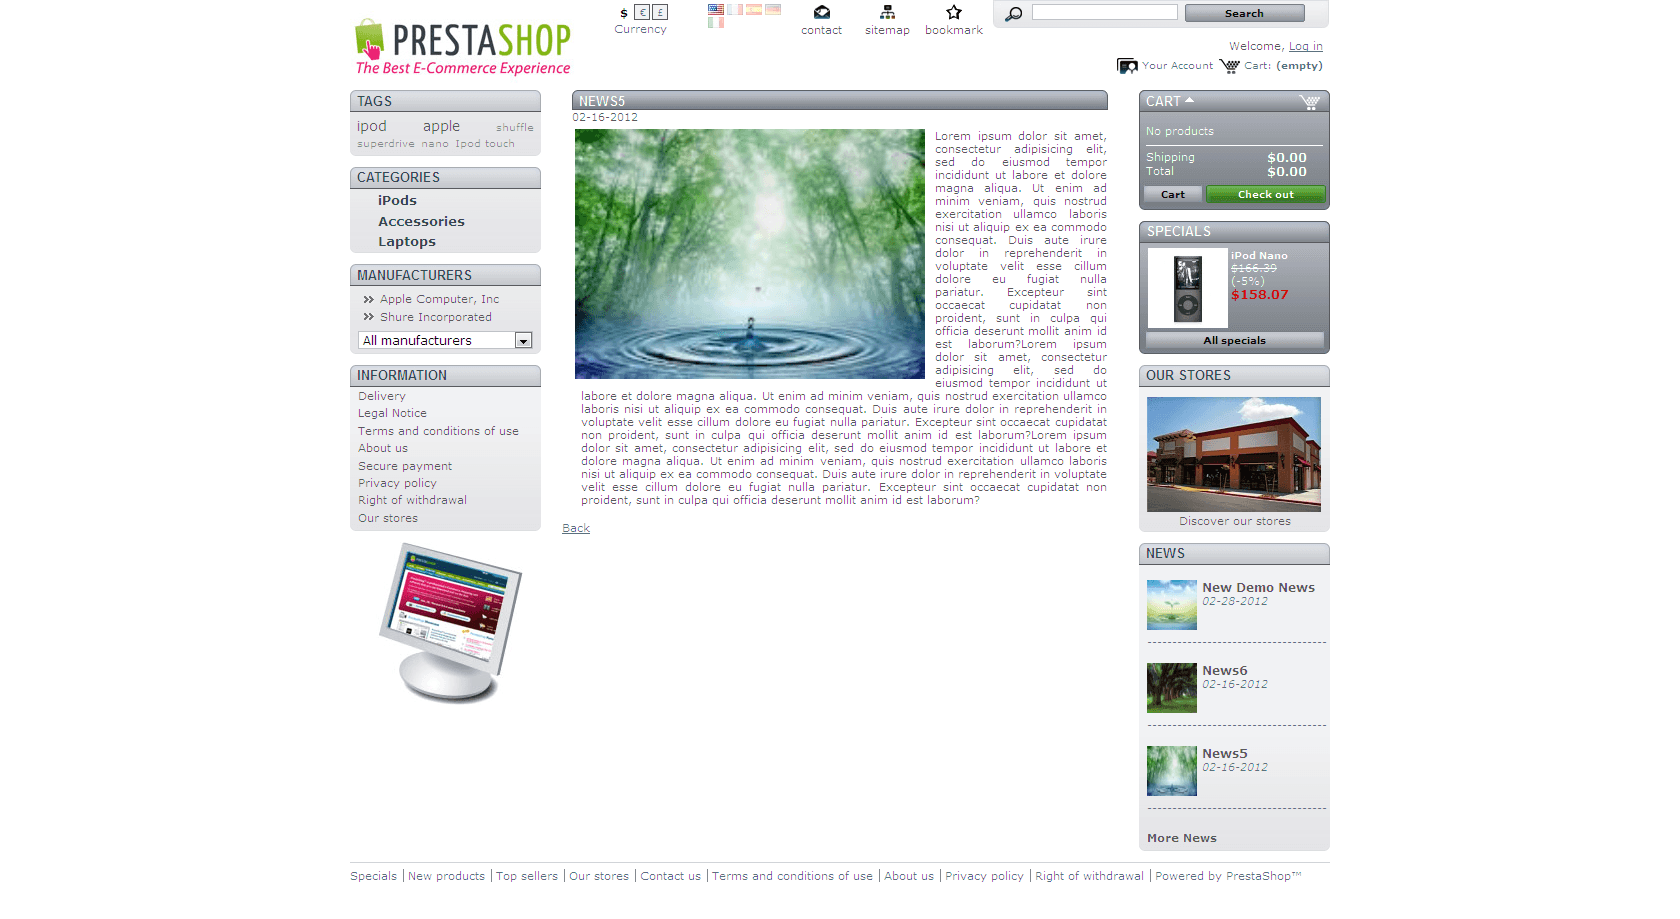 PrestaShop News Management Module